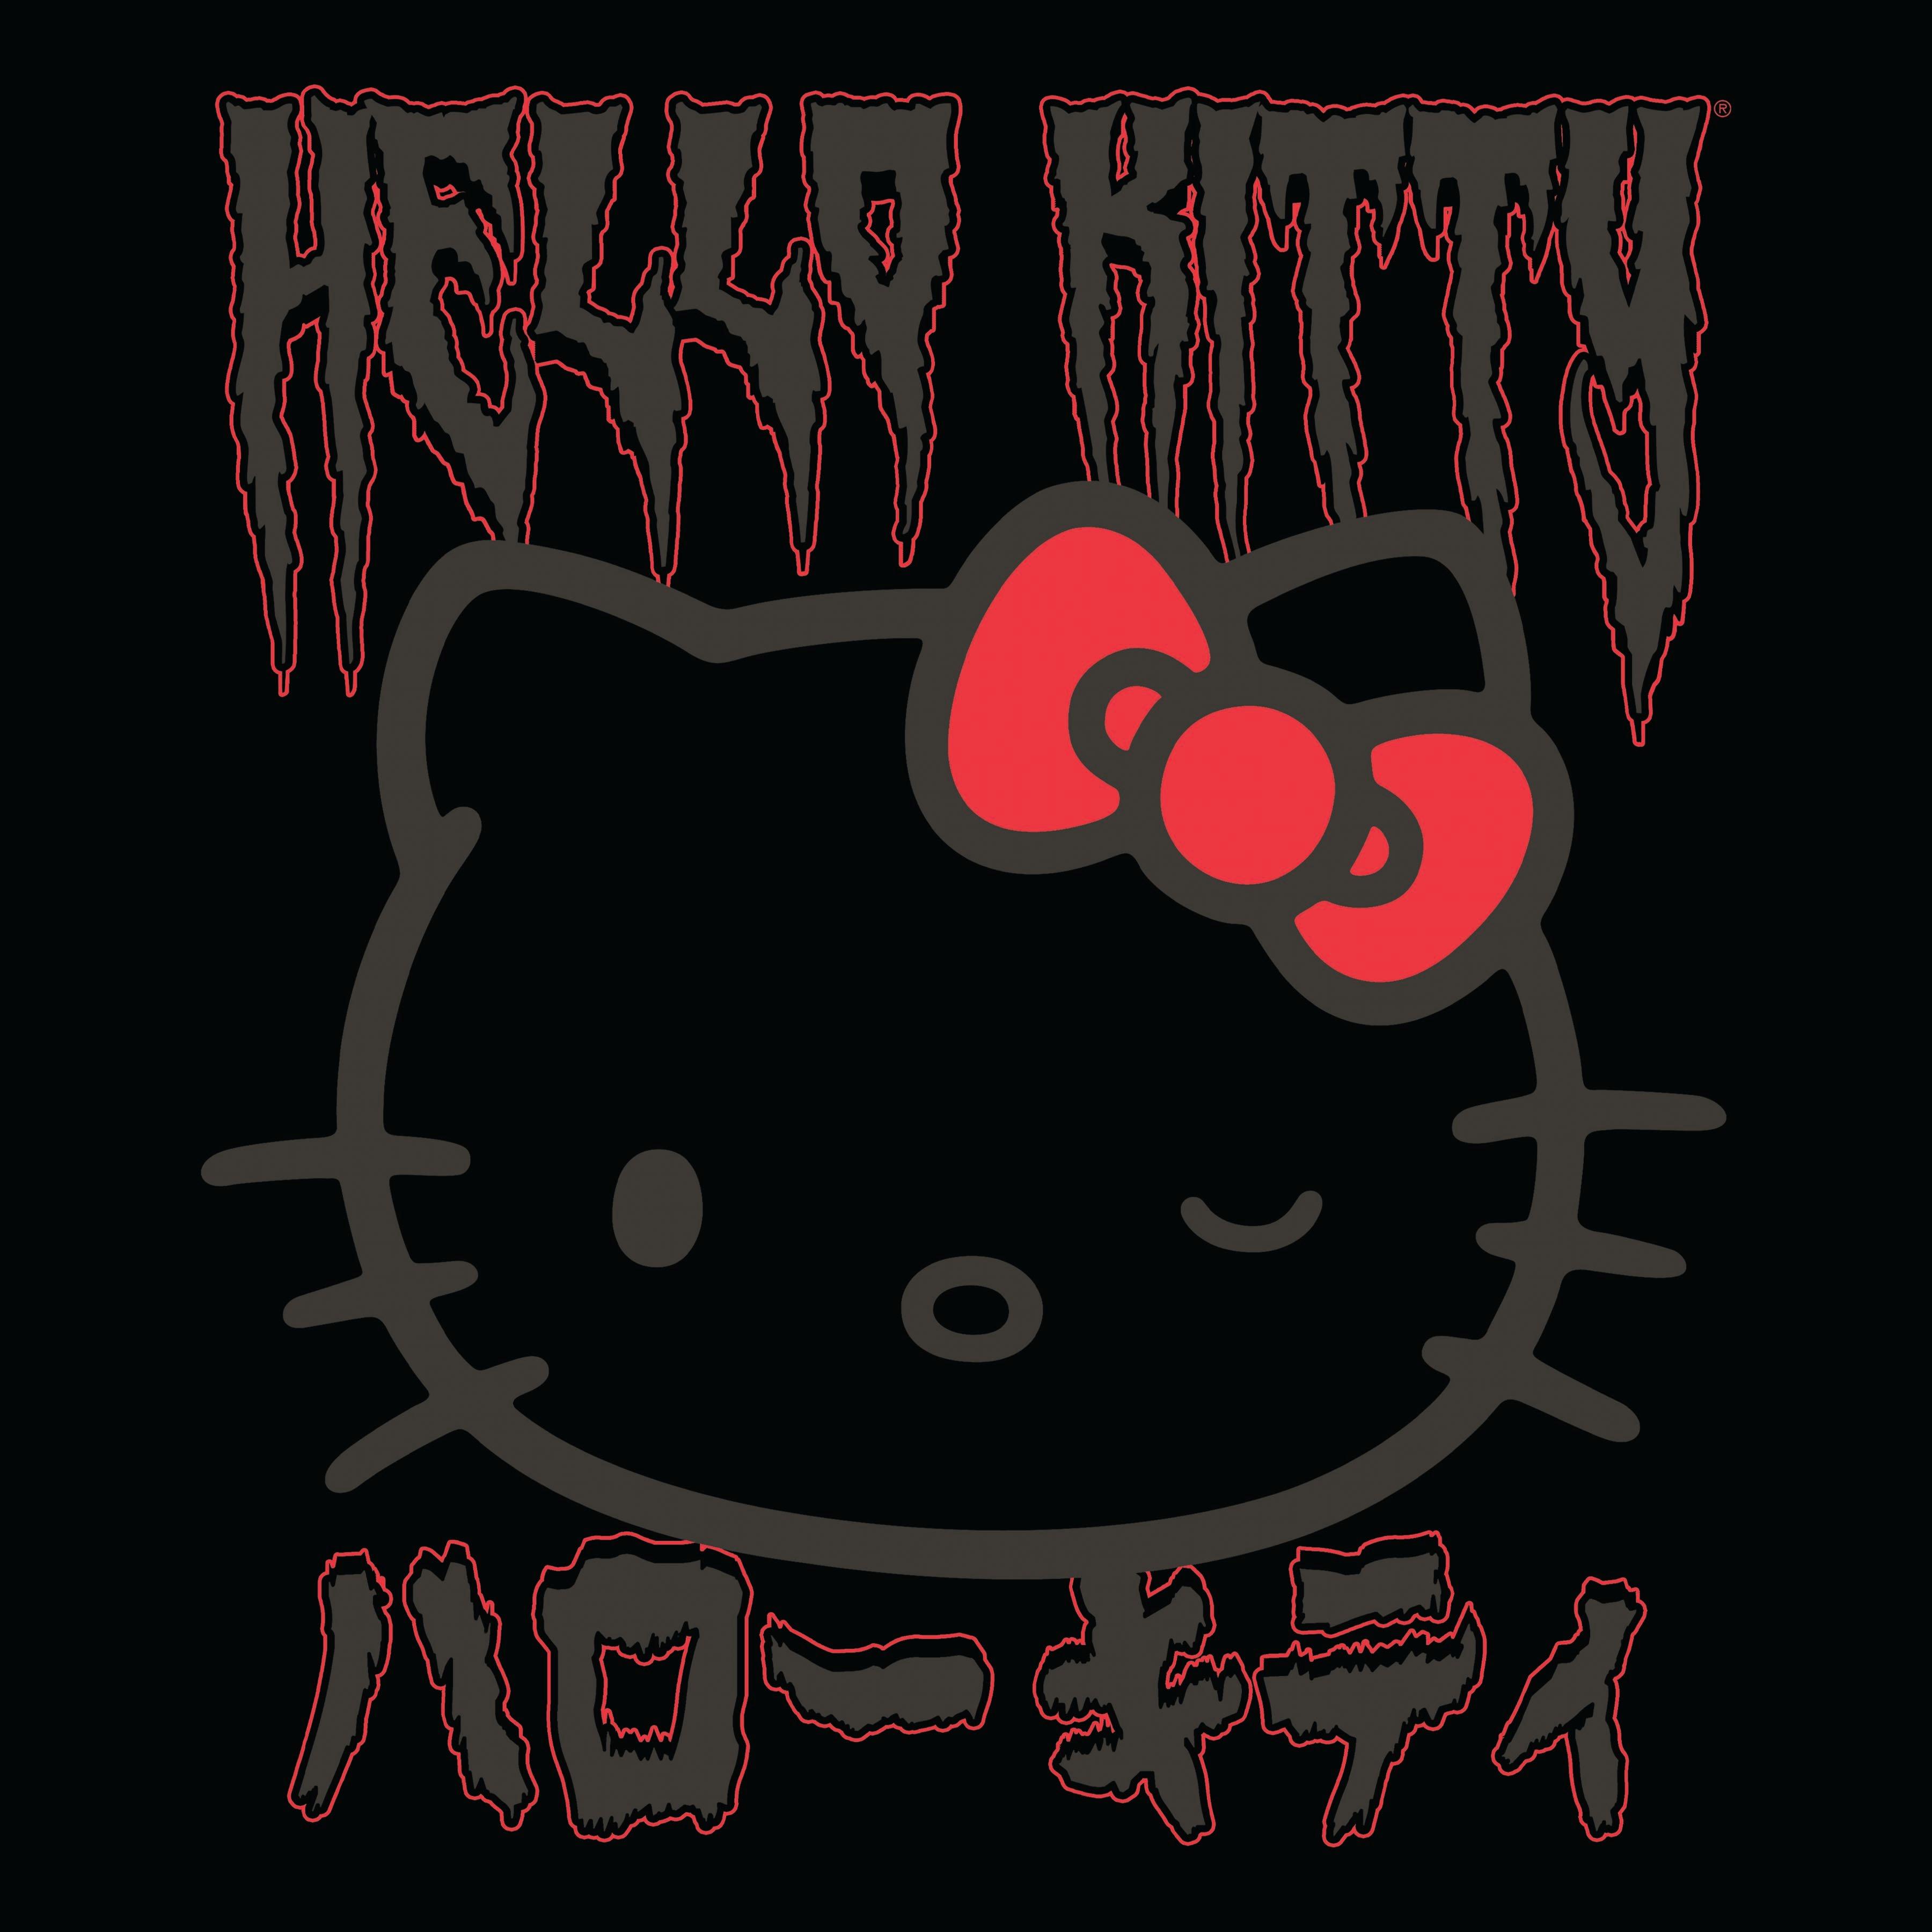 Buy Hello Kitty Plus Size Shirt online